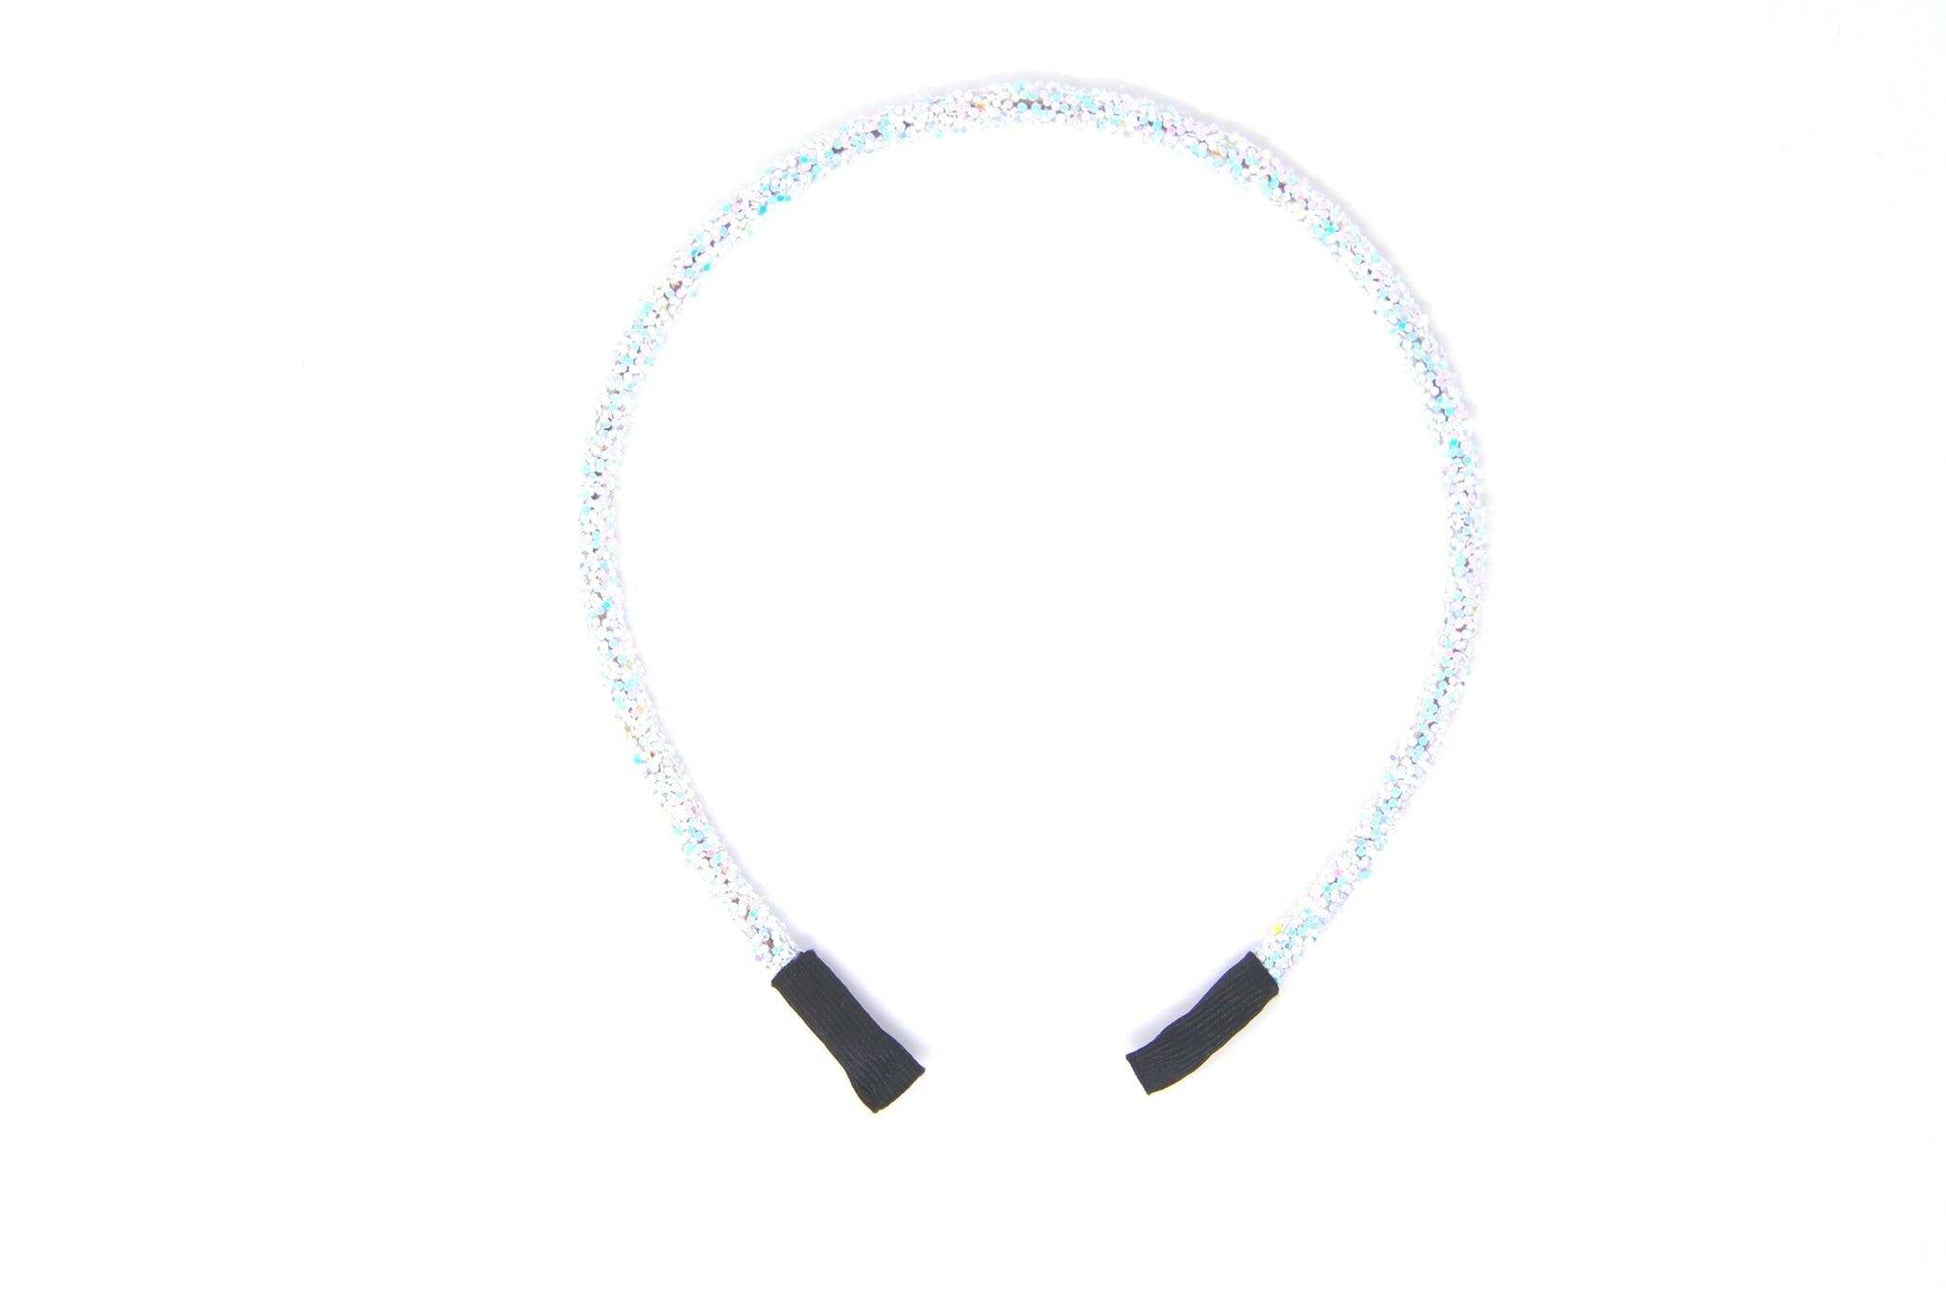 5.5" Iridescent Blue Chunky Glitter Headbands - Waterfall Wishes